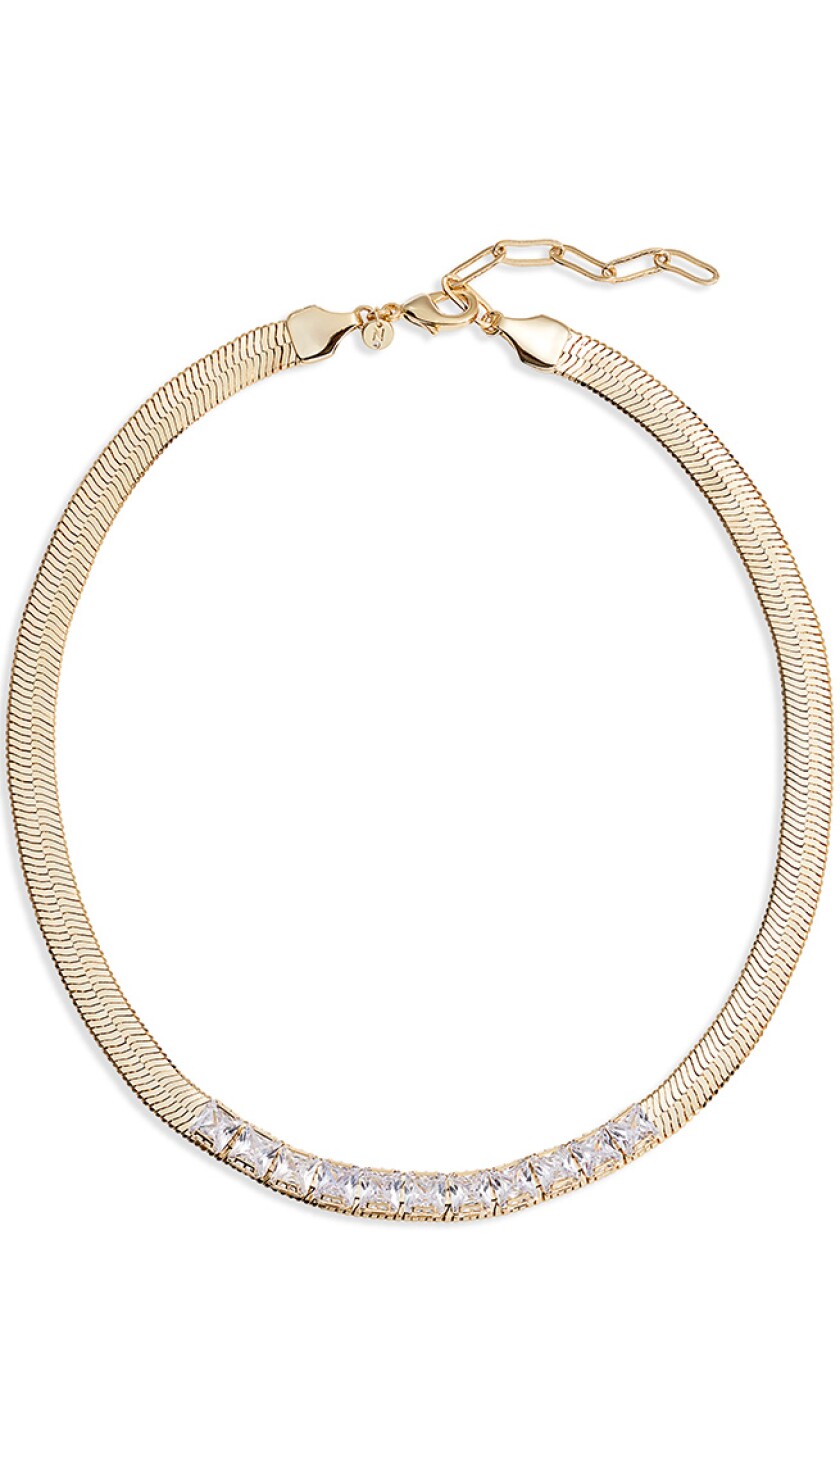 1140-embellishment-Nordstrom_Cubic Zirconia Collar Necklace_$45_Nordstrom.jpg